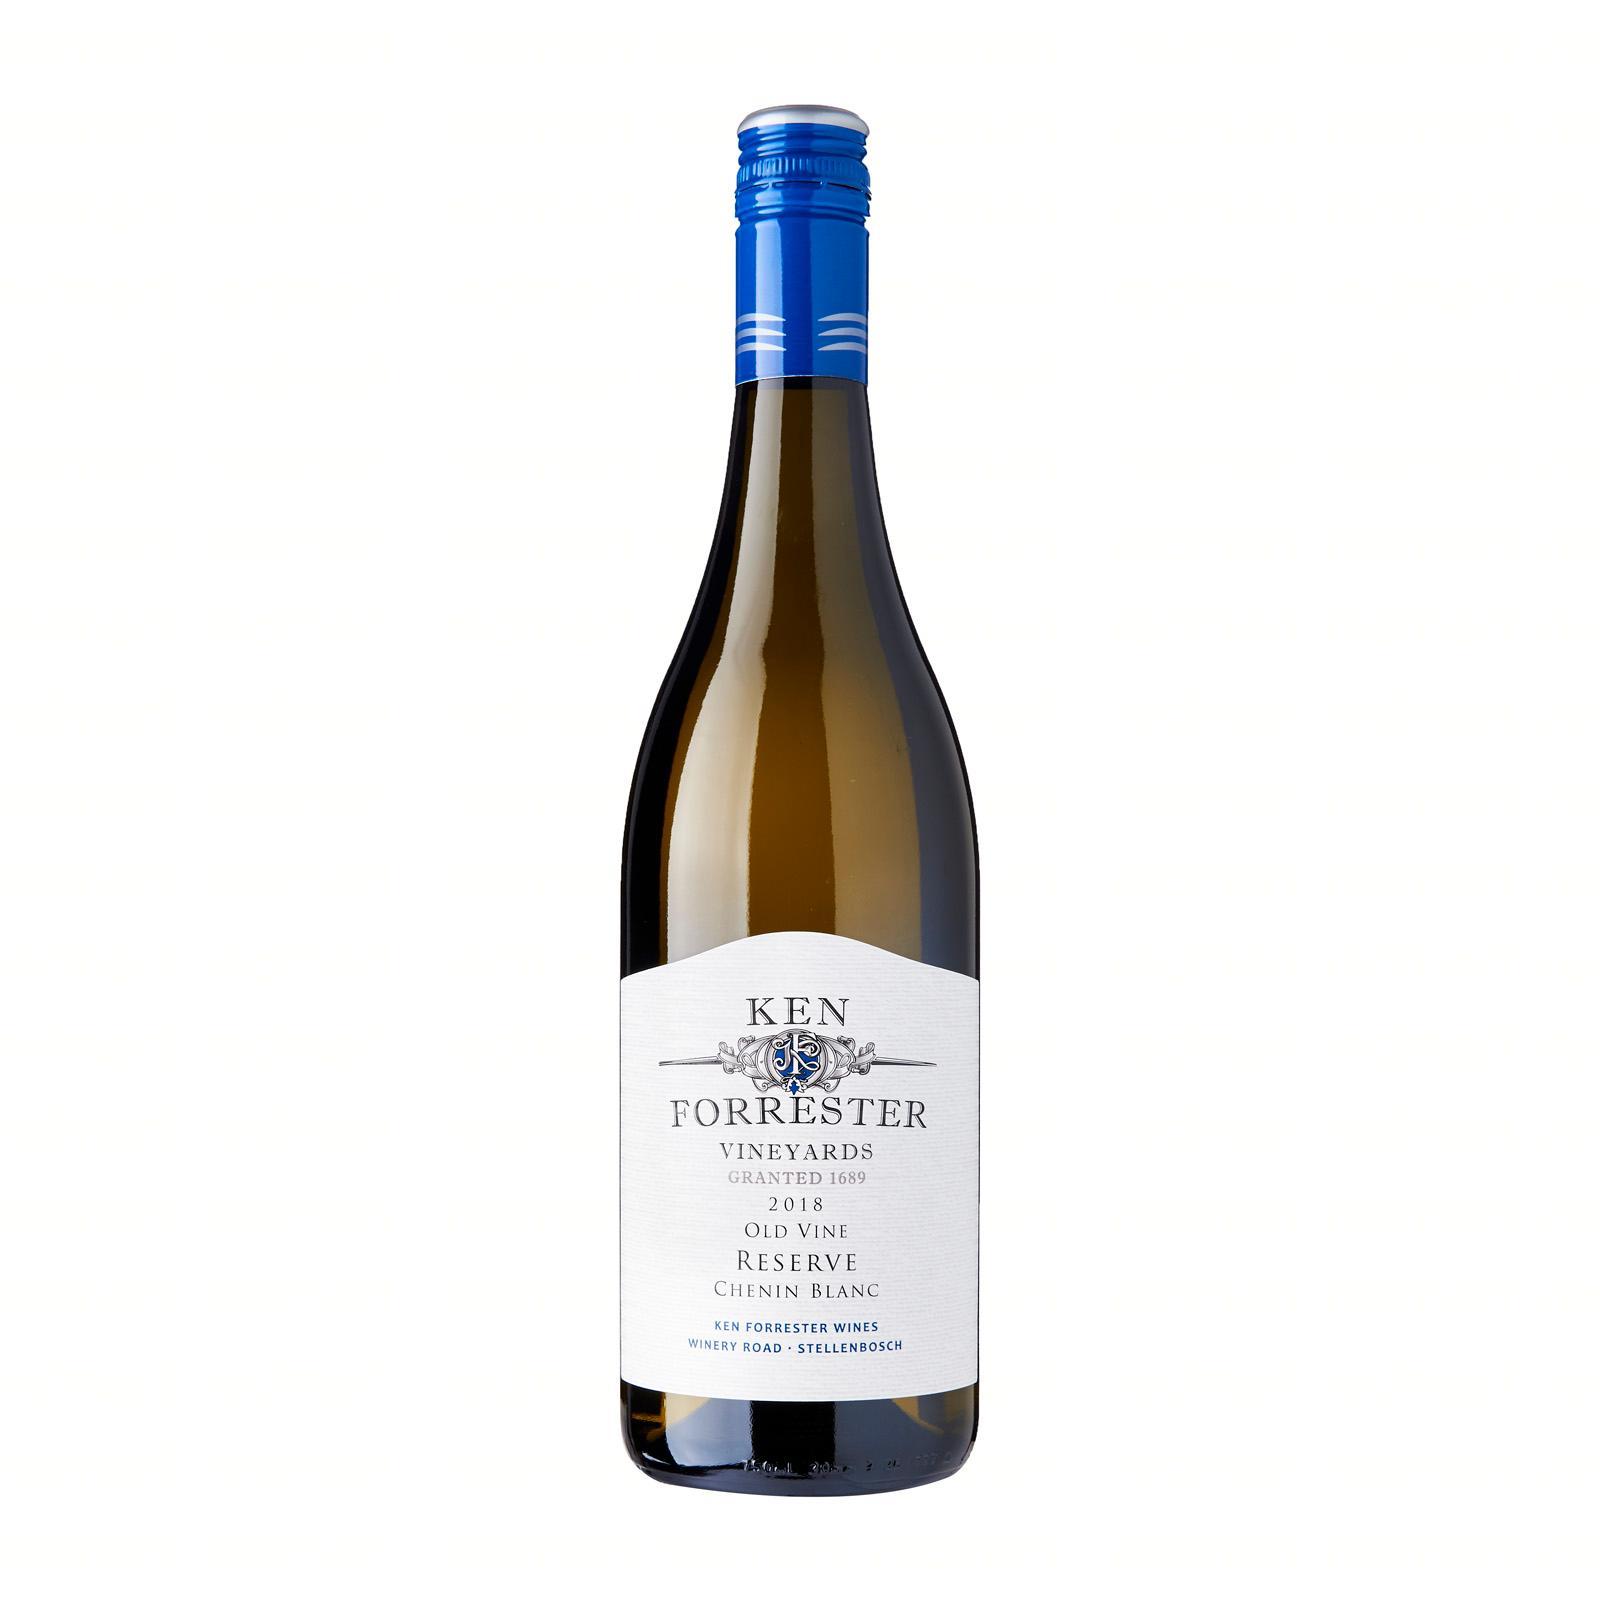 Ken Forrester Old Vine Chenin Blanc 2018 White Wine – Stellenbosch, South Africa